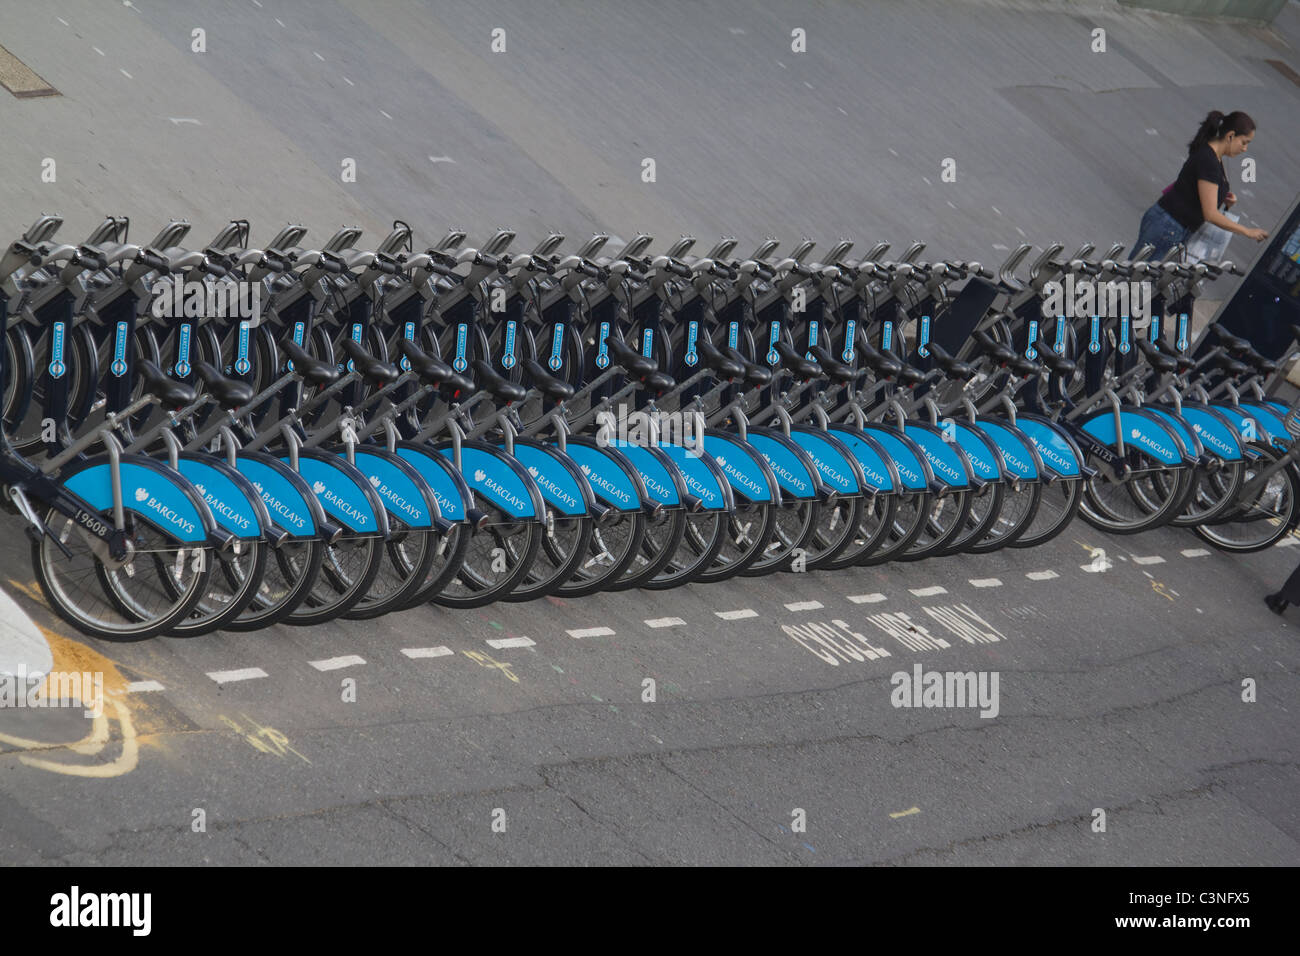 Reihe von Boris Bikes, blaue Barclays mieten Zyklus Regelung in london Stockfoto